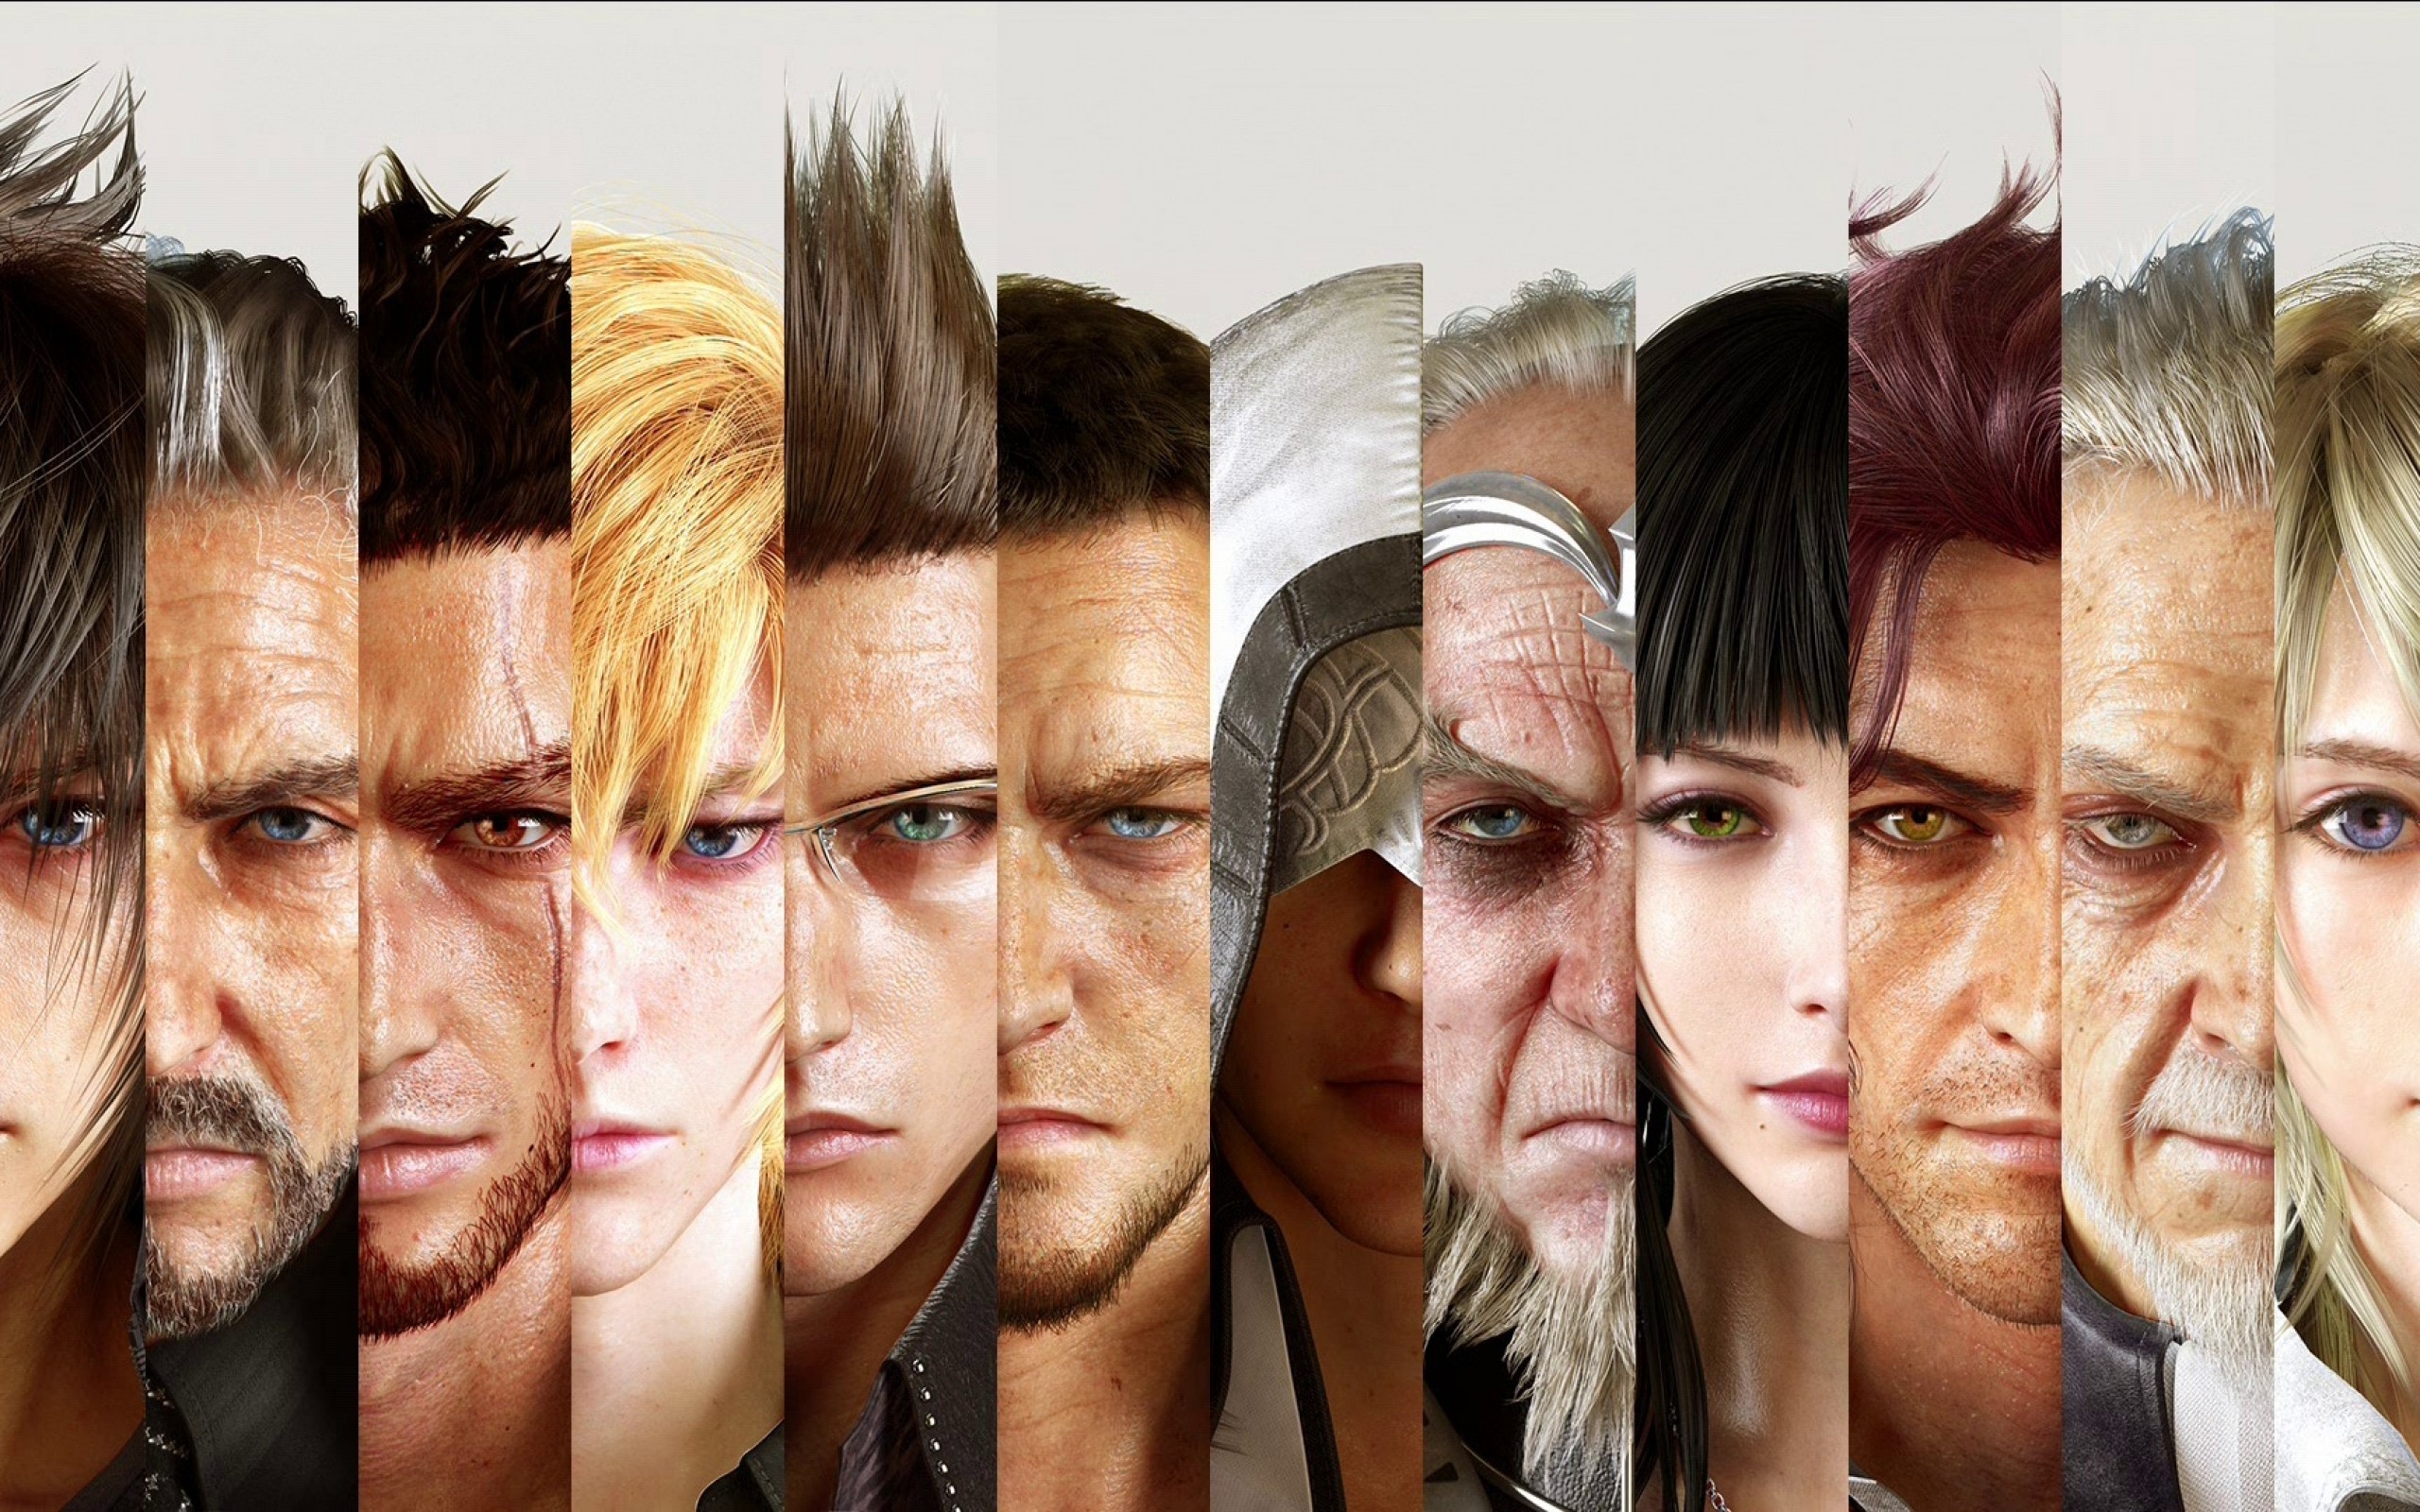 Final Fantasy XV Cast for 2560 x 1600 widescreen resolution